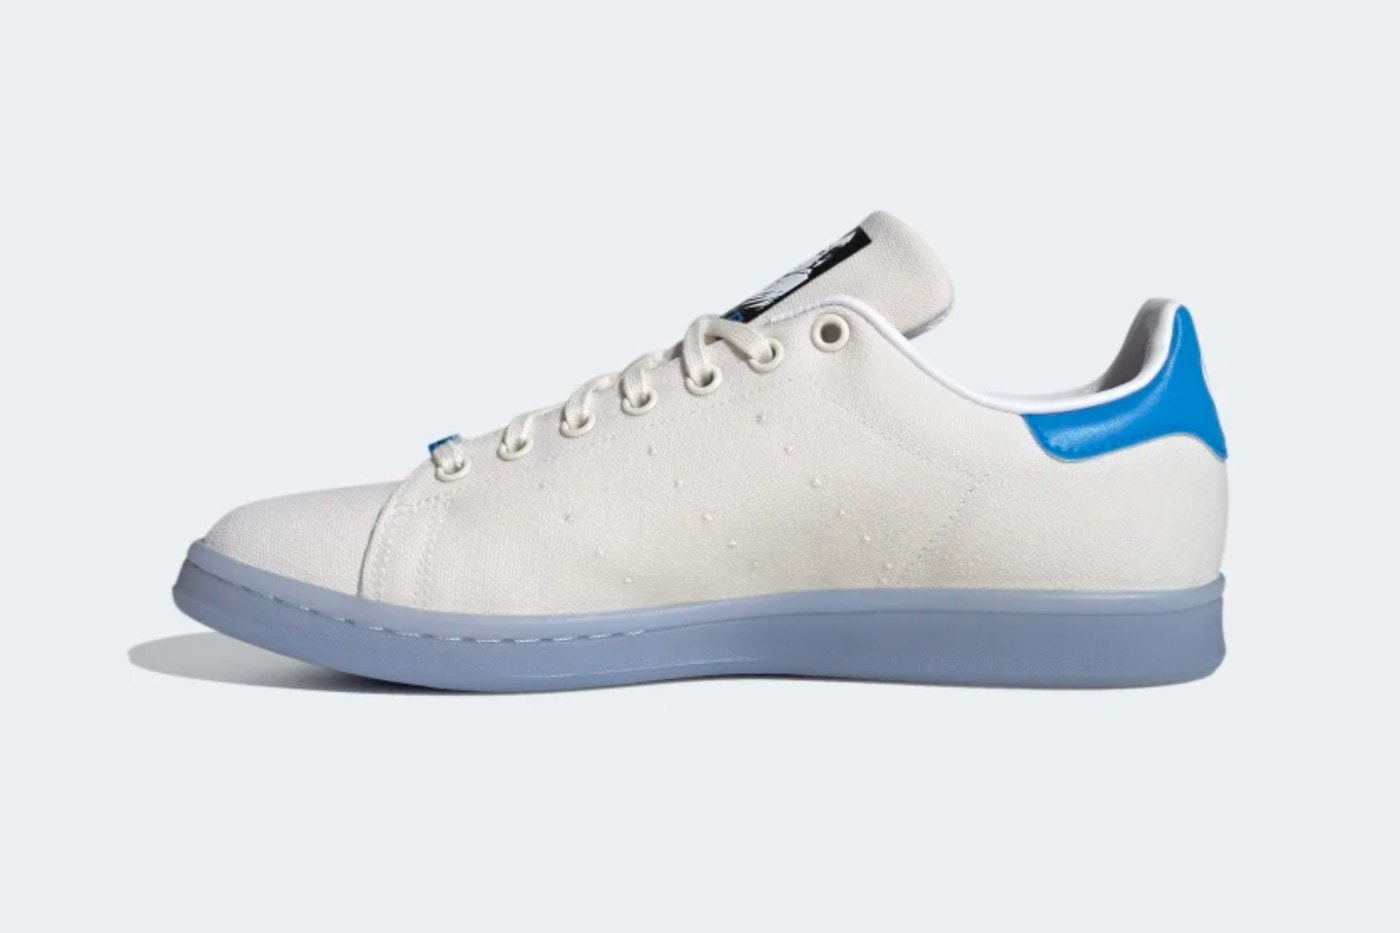 《Star Wars》x adidas Stan Smith「Luke Skywalker」最新聯乘鞋款發佈